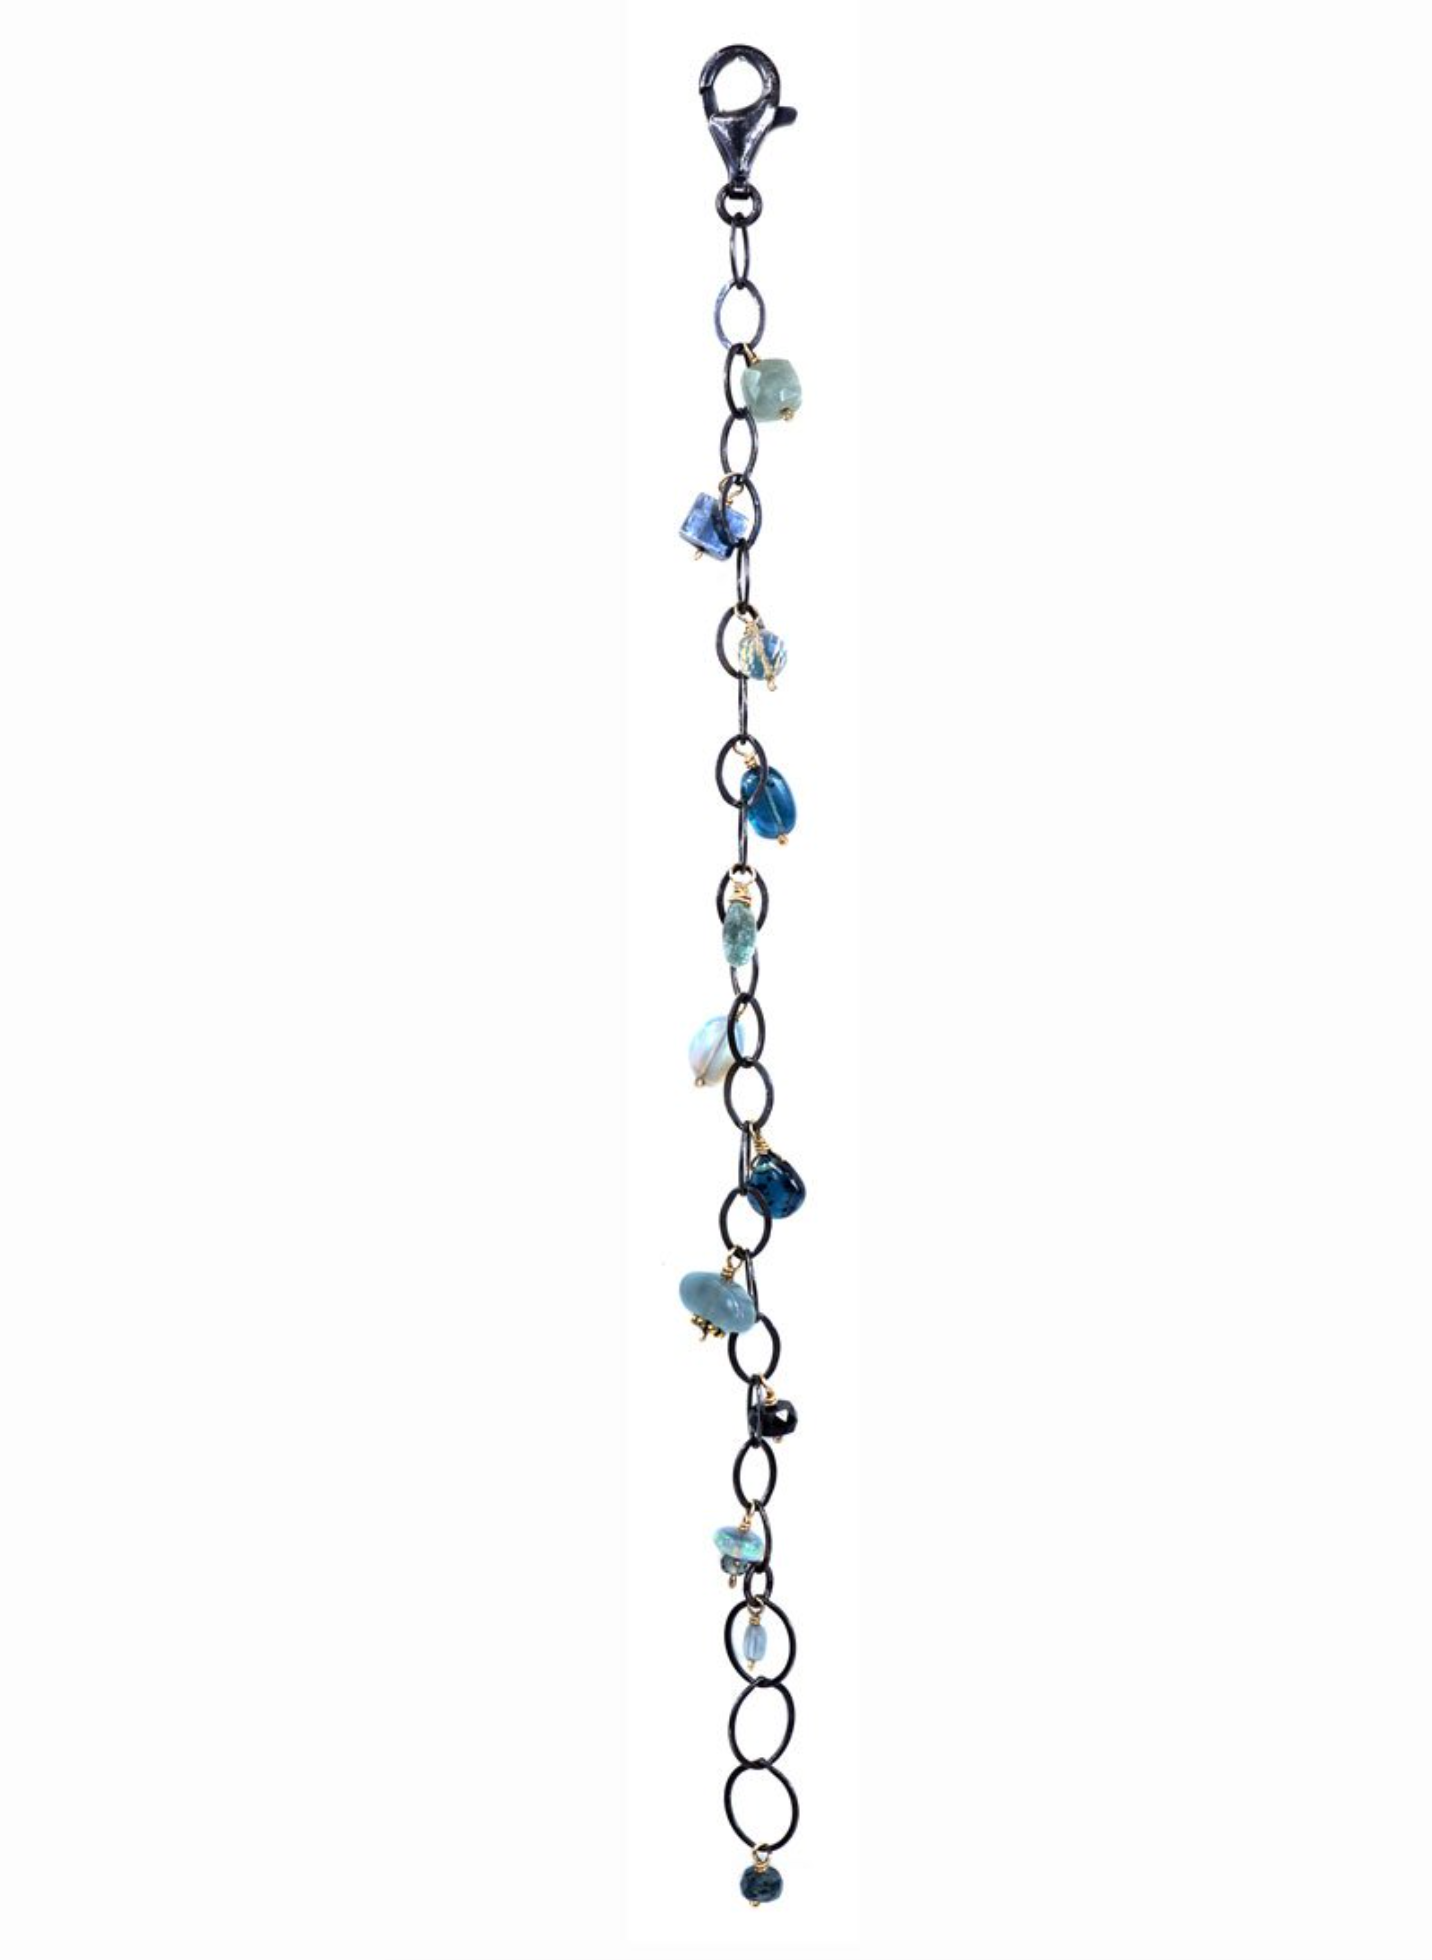 Opal and Aquamarine Bracelet